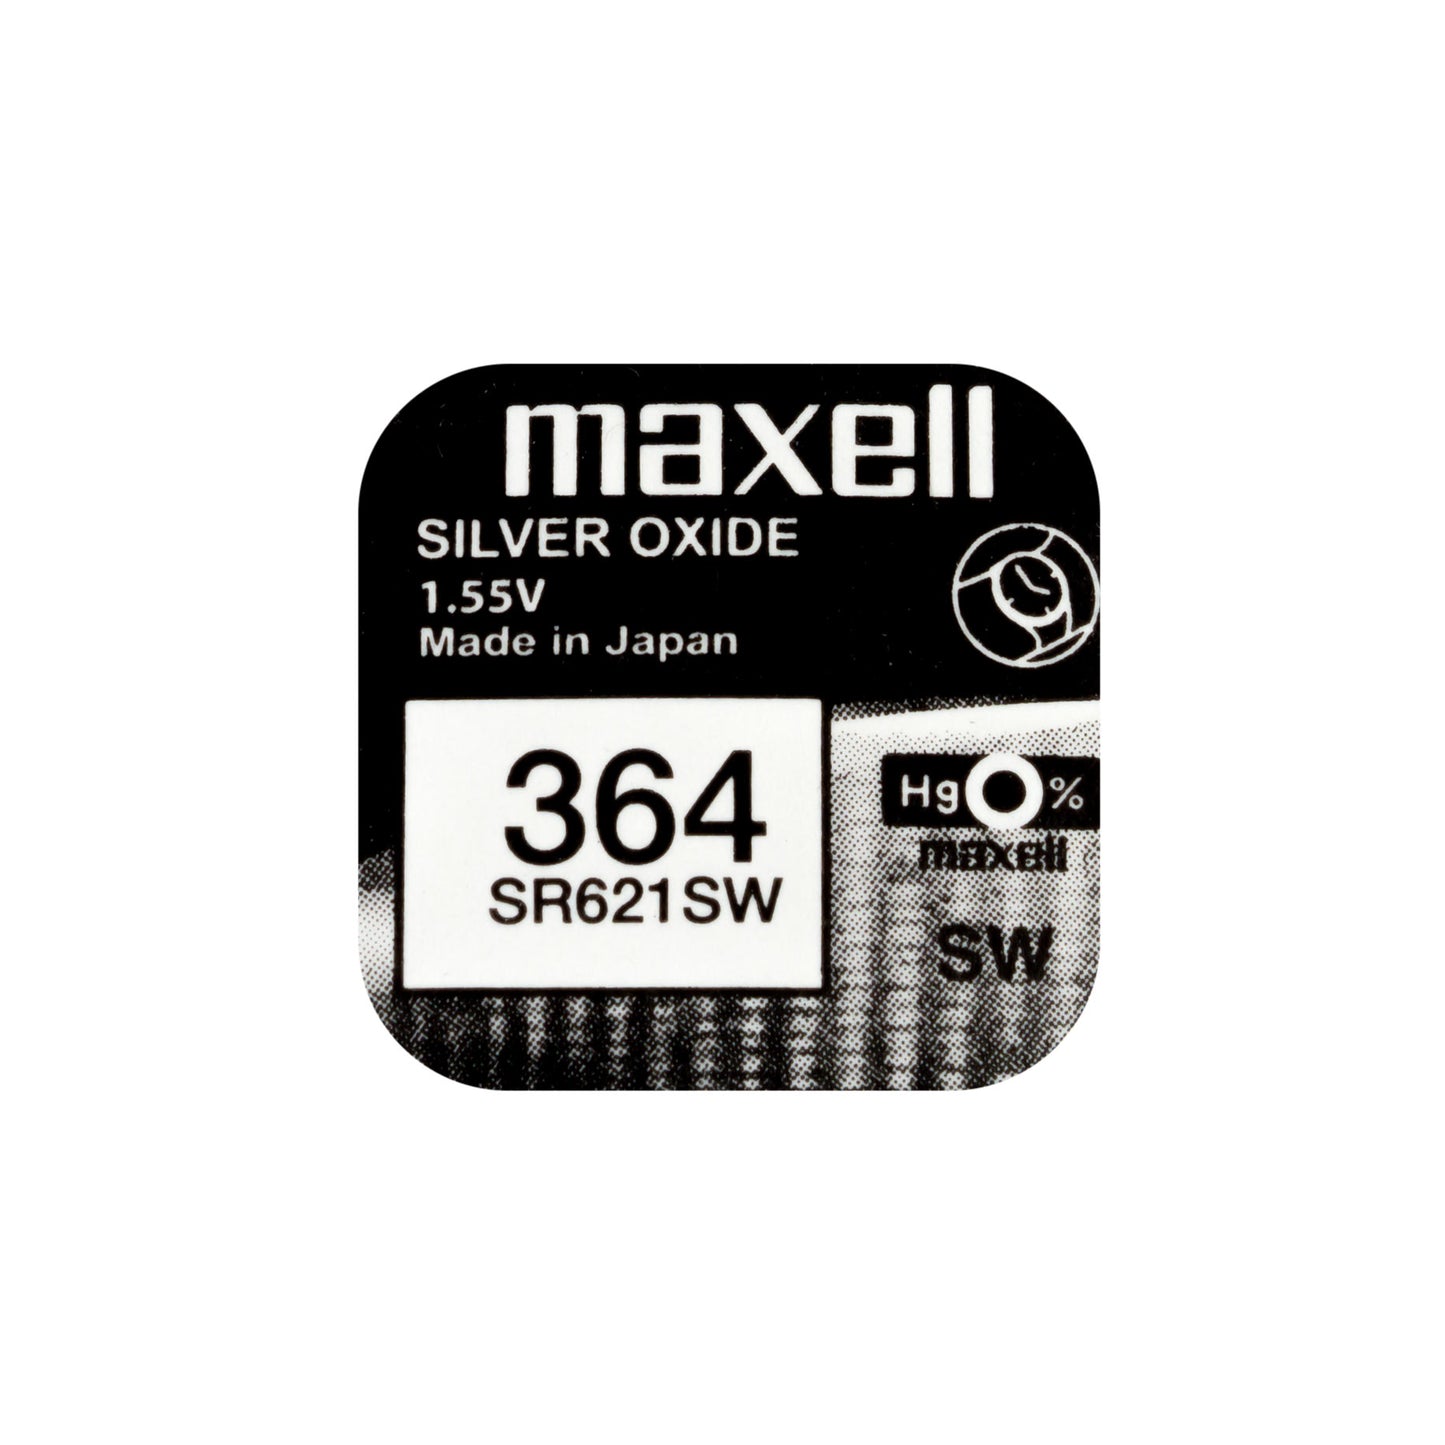 Maxell SR621SW (364) Silver Oxide Watch Batteries